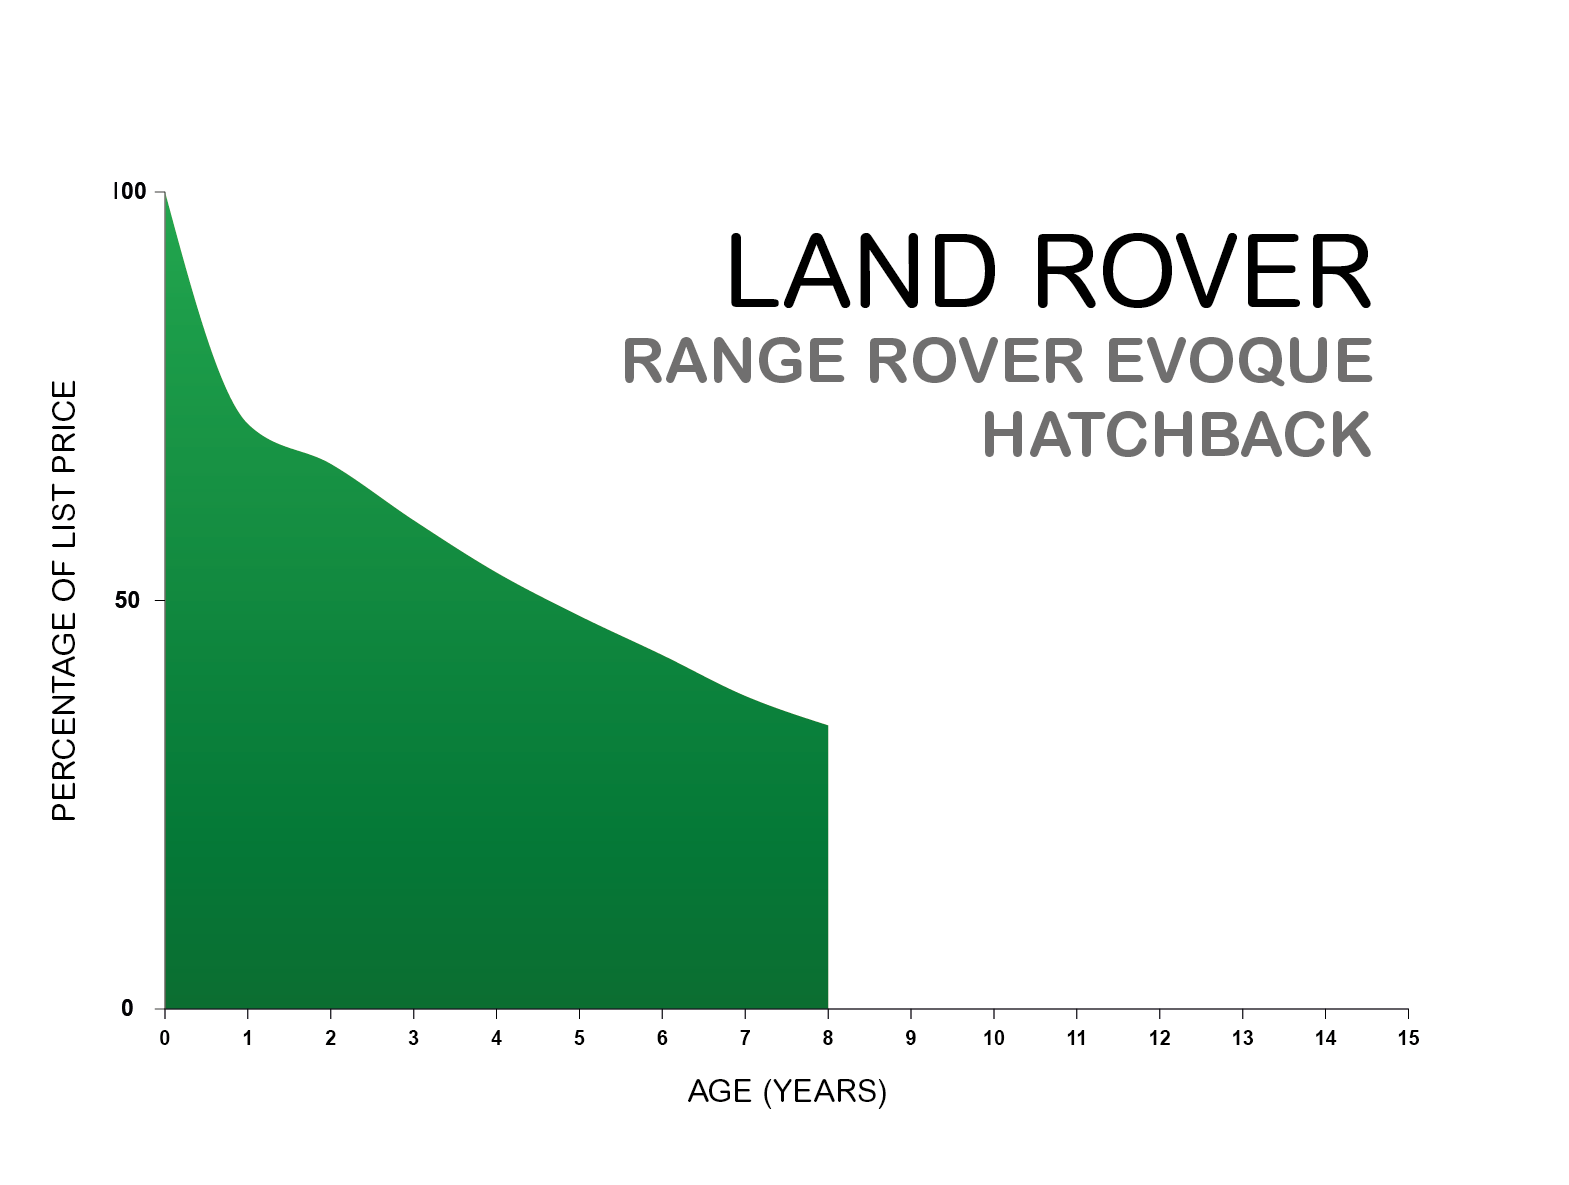 Range Rover Evoque depreciation